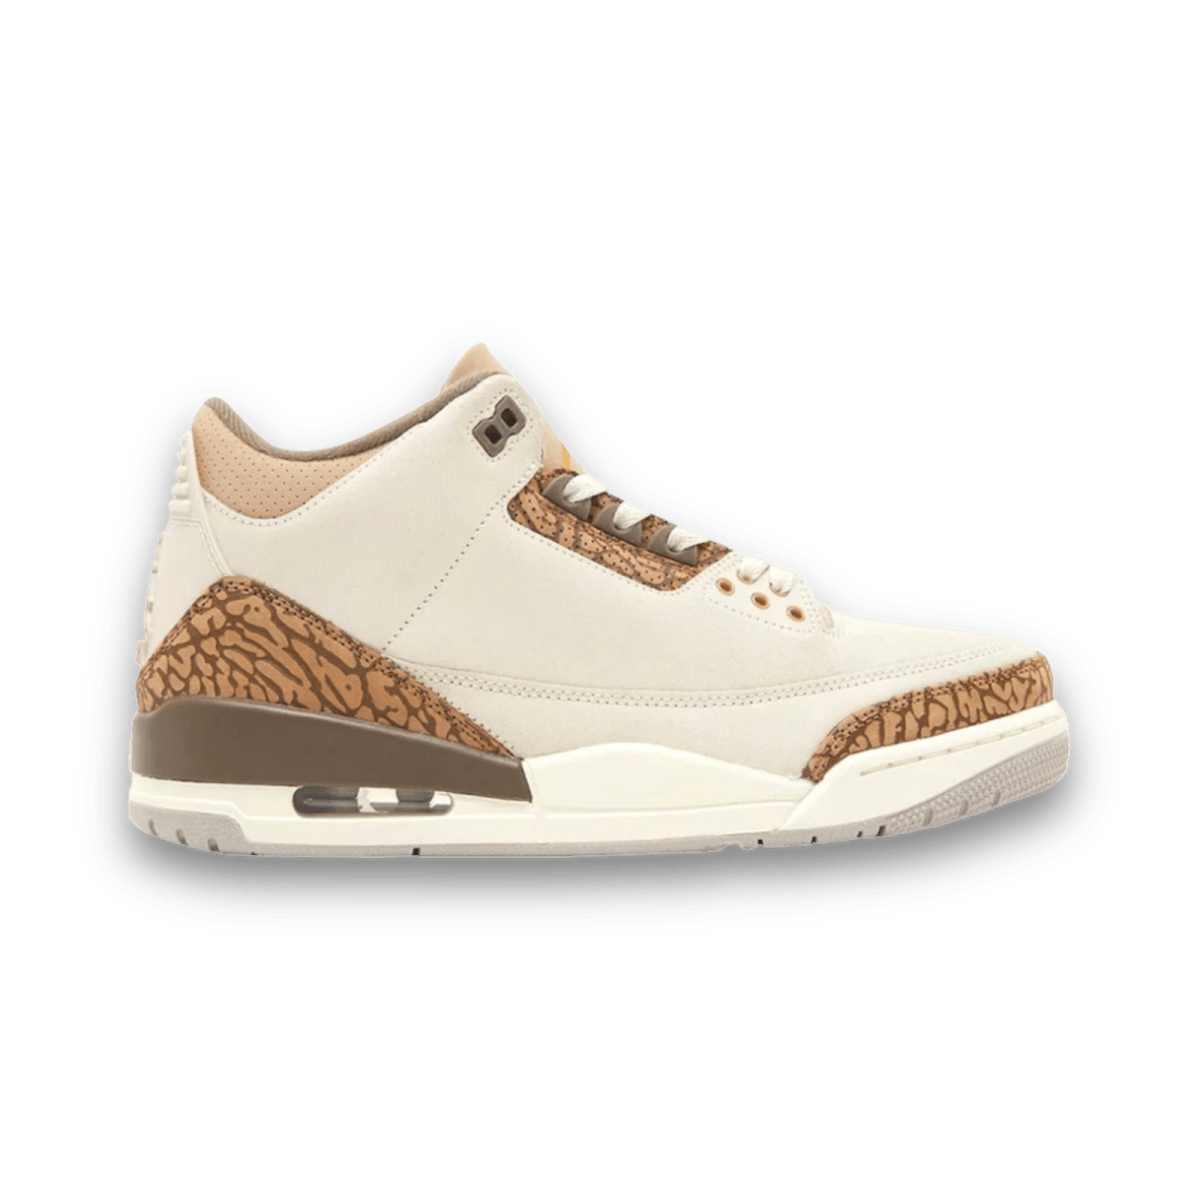 Air Jordan 3 Retro 'Palomino' - Mid Sneaker - Jawns on Fire Sneakers & Streetwear